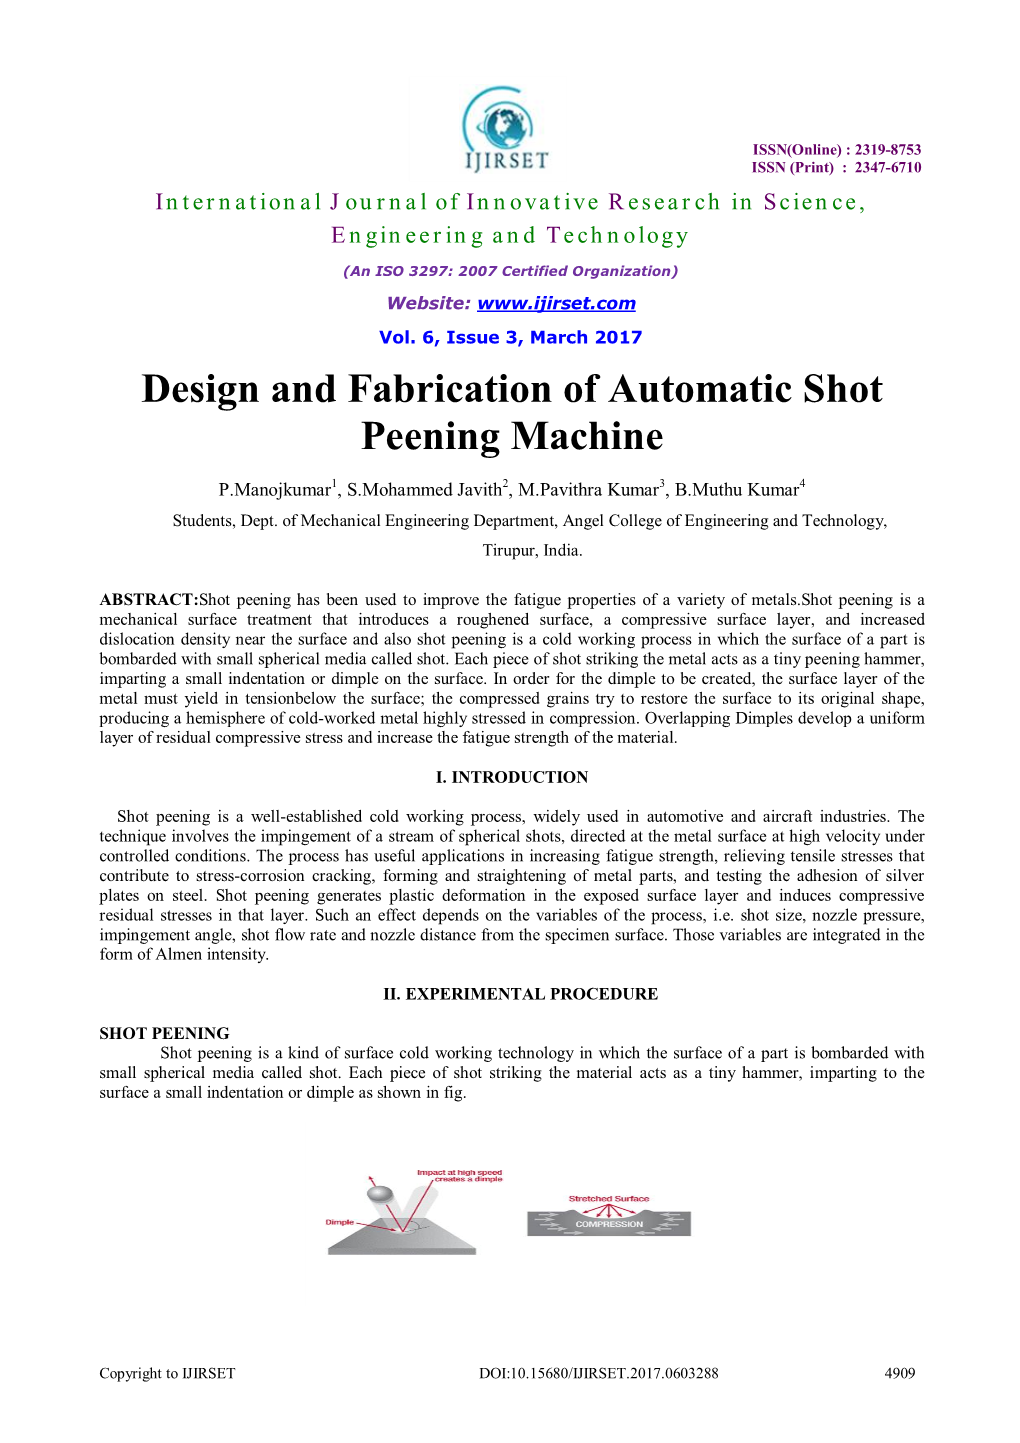 Design and Fabrication of Automatic Shot Peening Machine